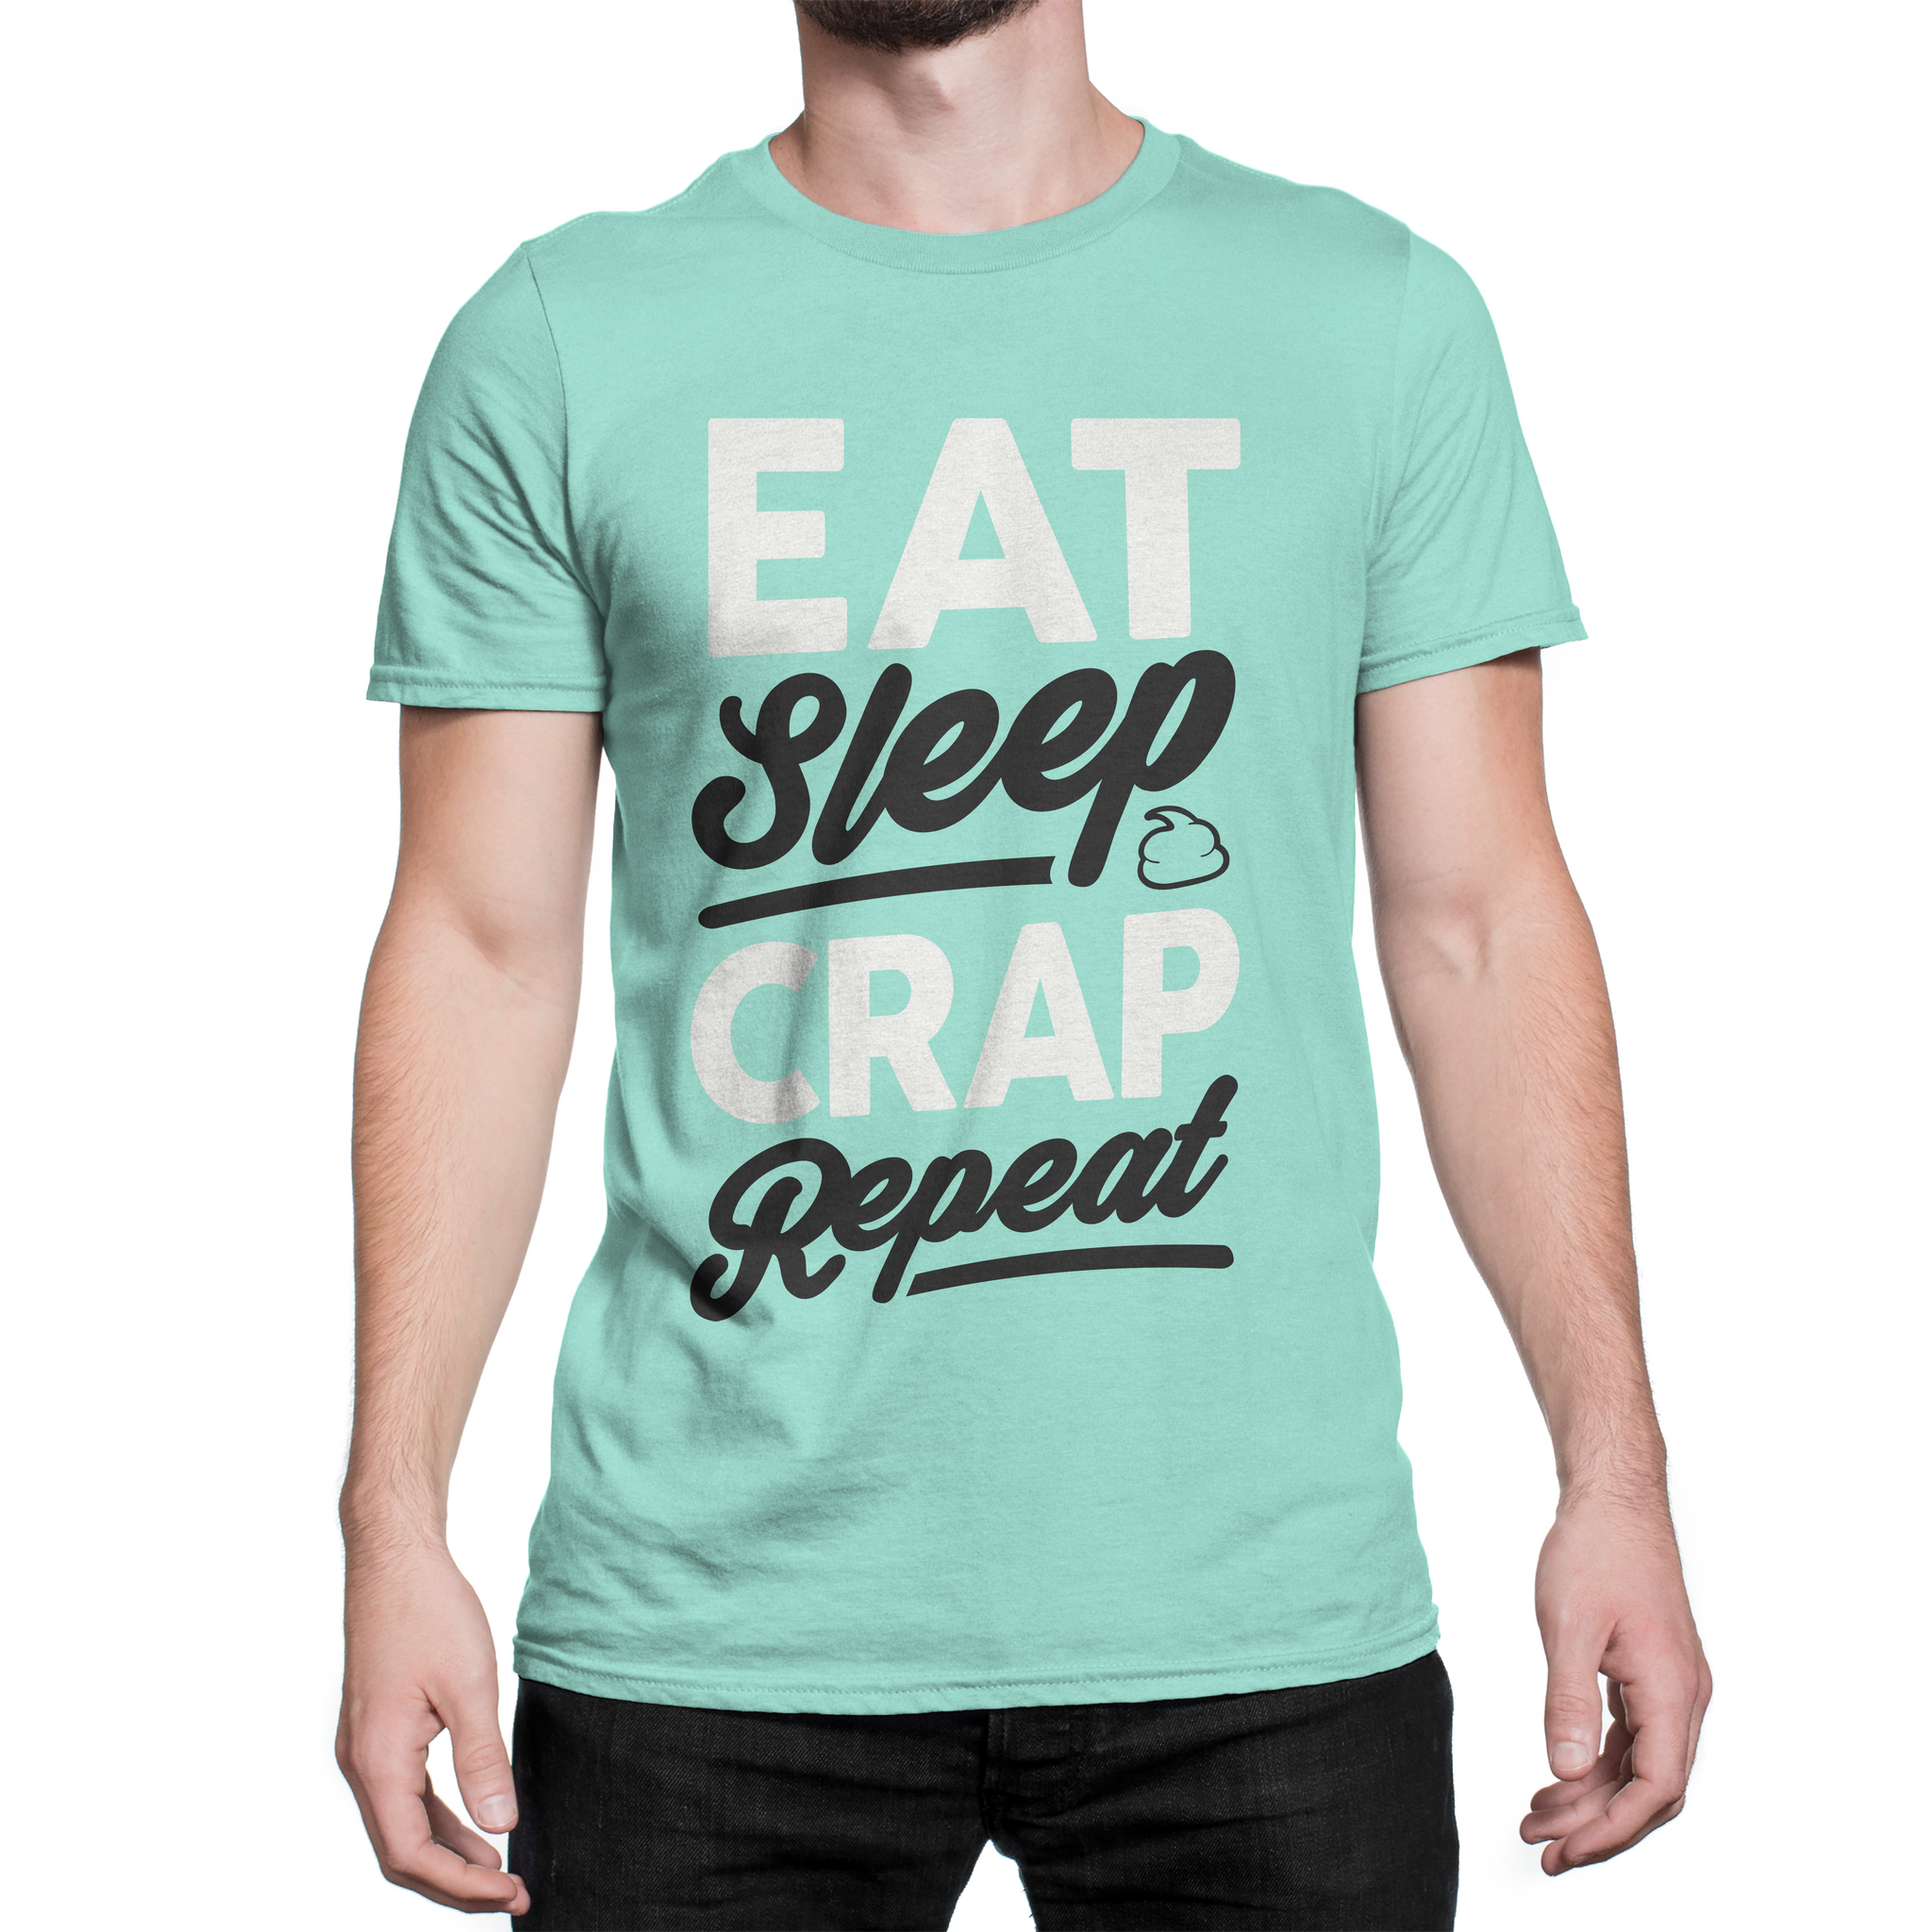 Eat Sleep Crap Repeat T-Shirt (Seafoam)